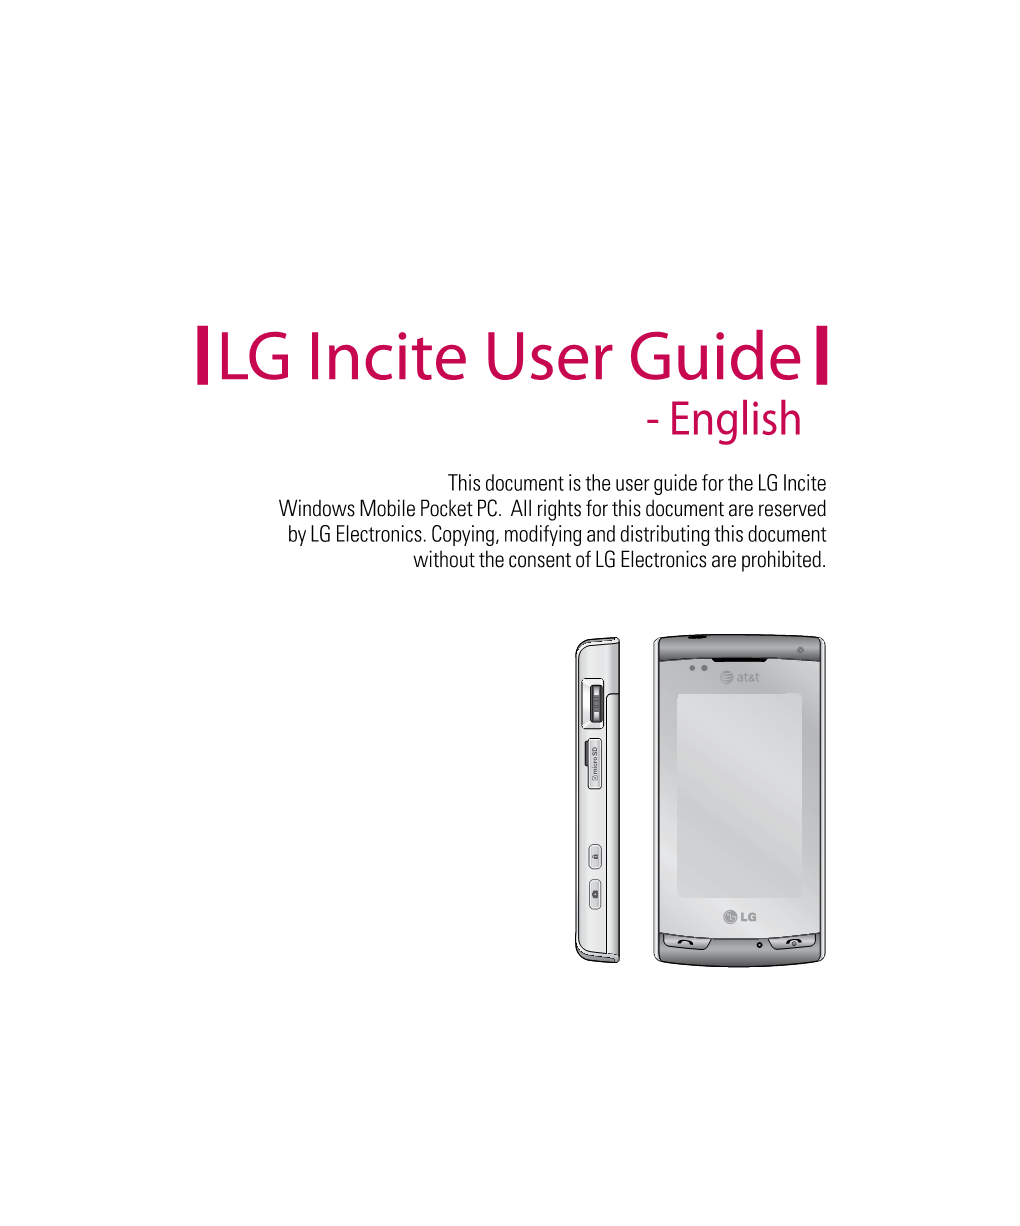 LG Incite User Guide - English